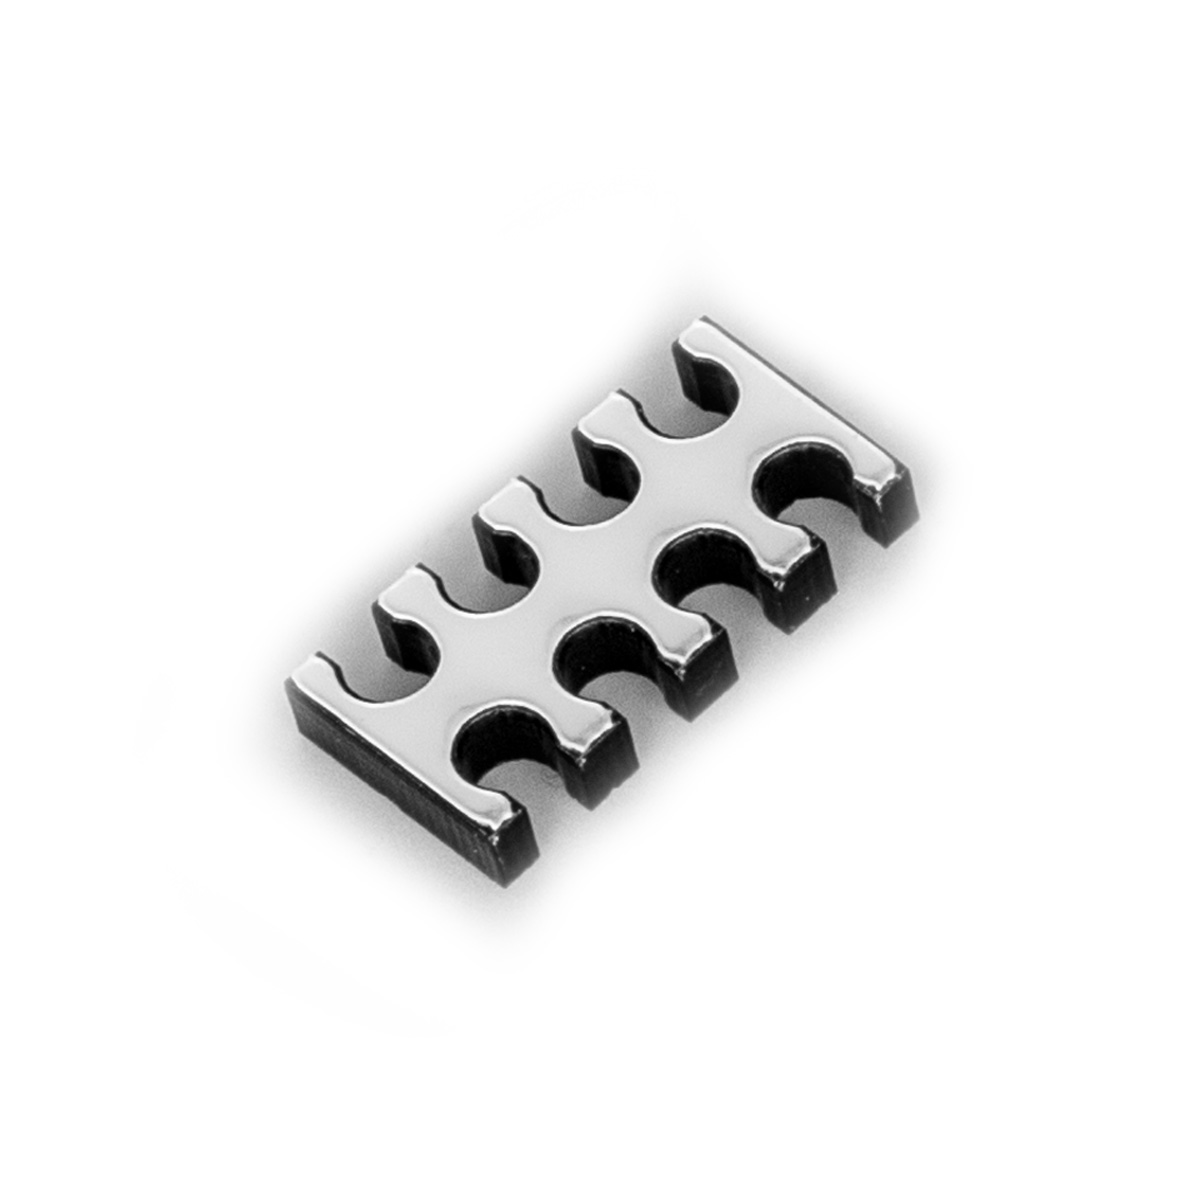 TechForge 8 Slot Cable Comb (Small) 3mm  - Black